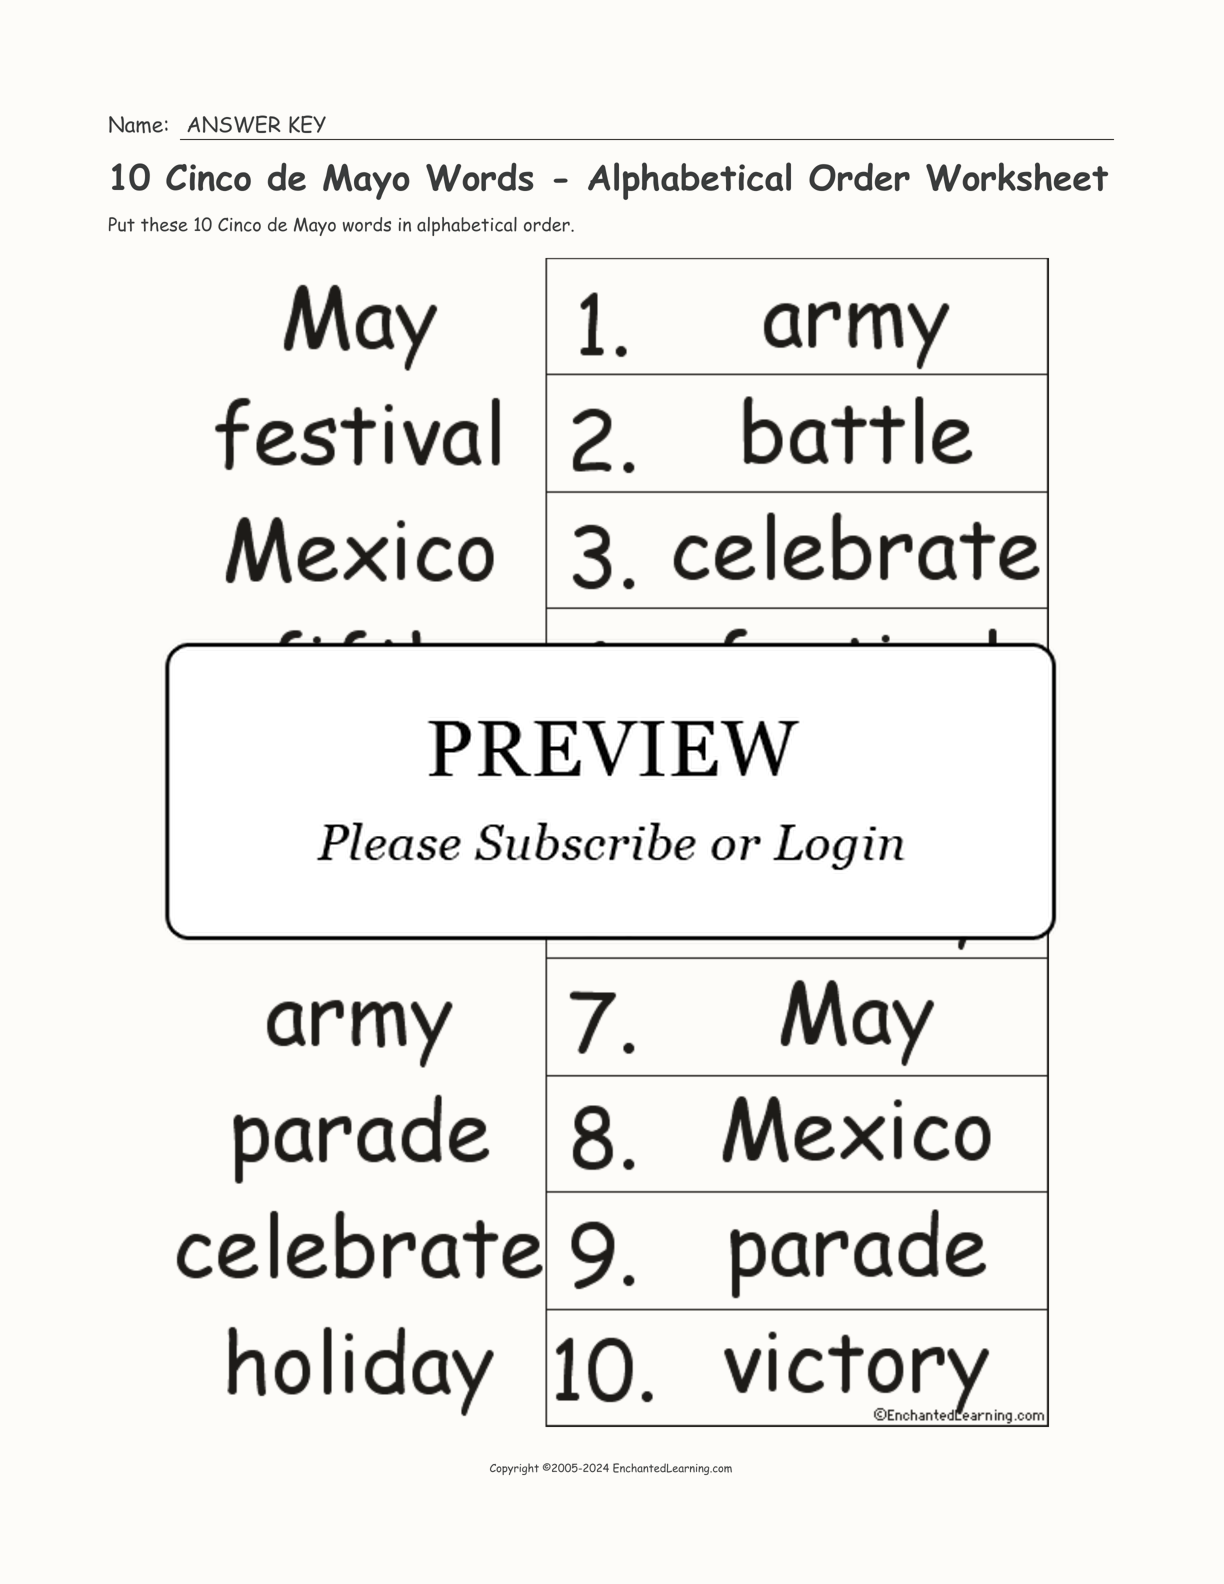 10 Cinco de Mayo Words - Alphabetical Order Worksheet interactive worksheet page 2